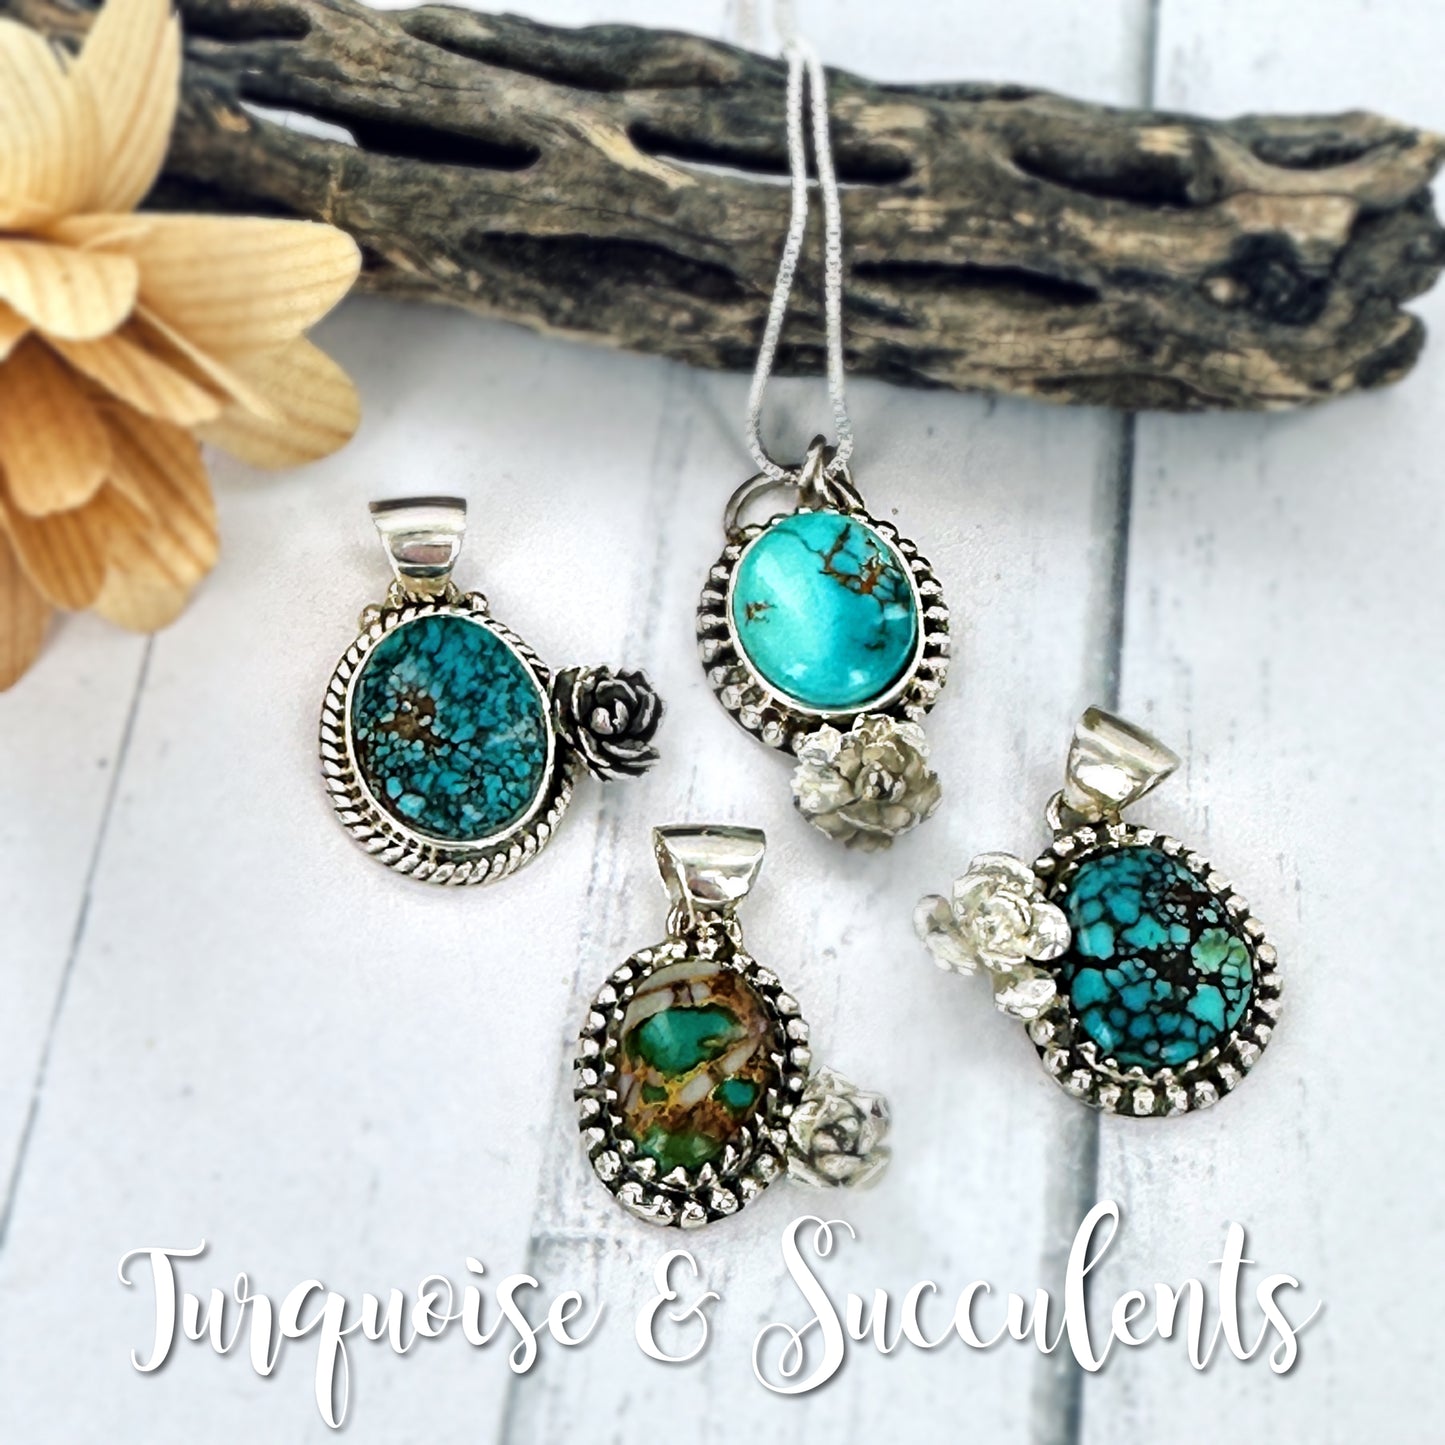 Turquoise & Succulents Pendant